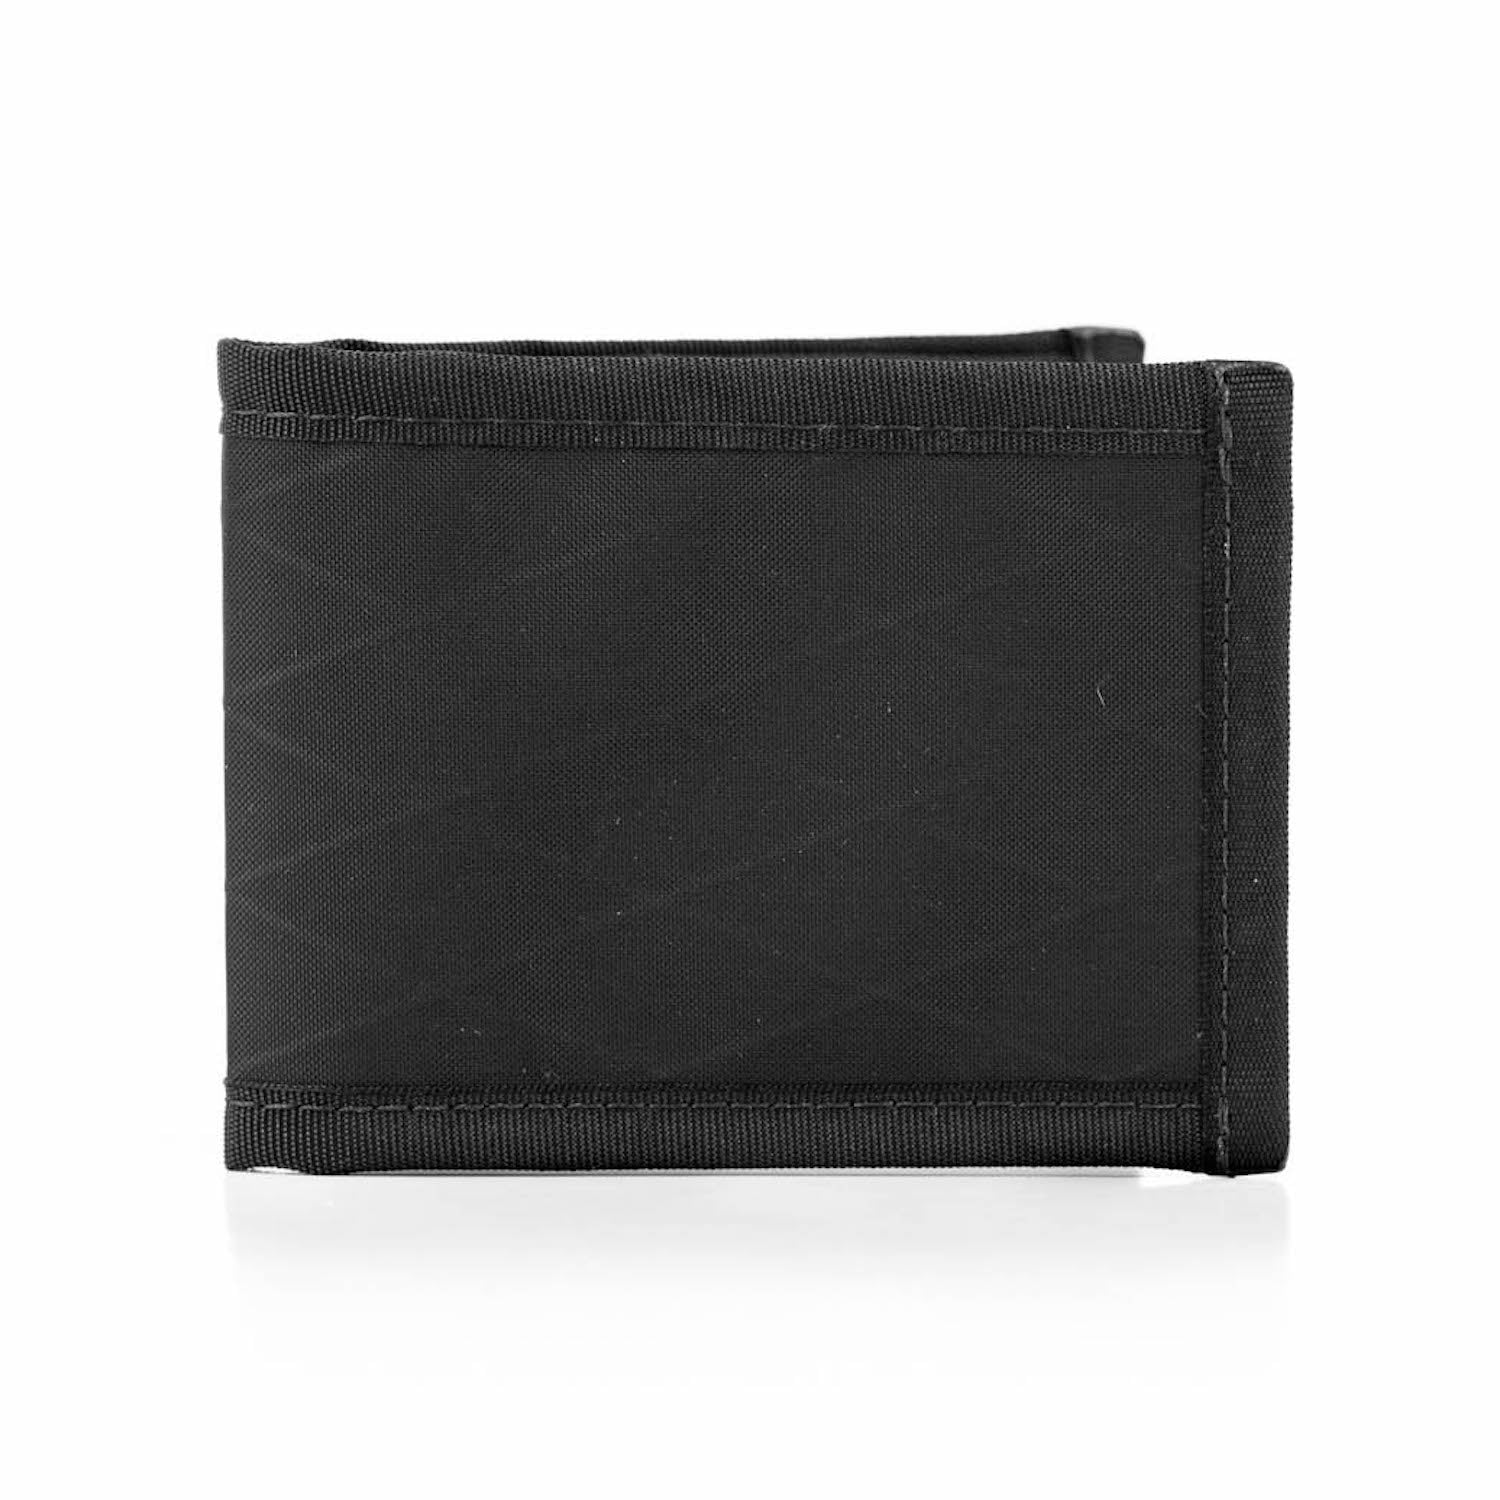 Cards Wallet in Black Cordura. Minimalist Vegan Wallet. Small bifold.